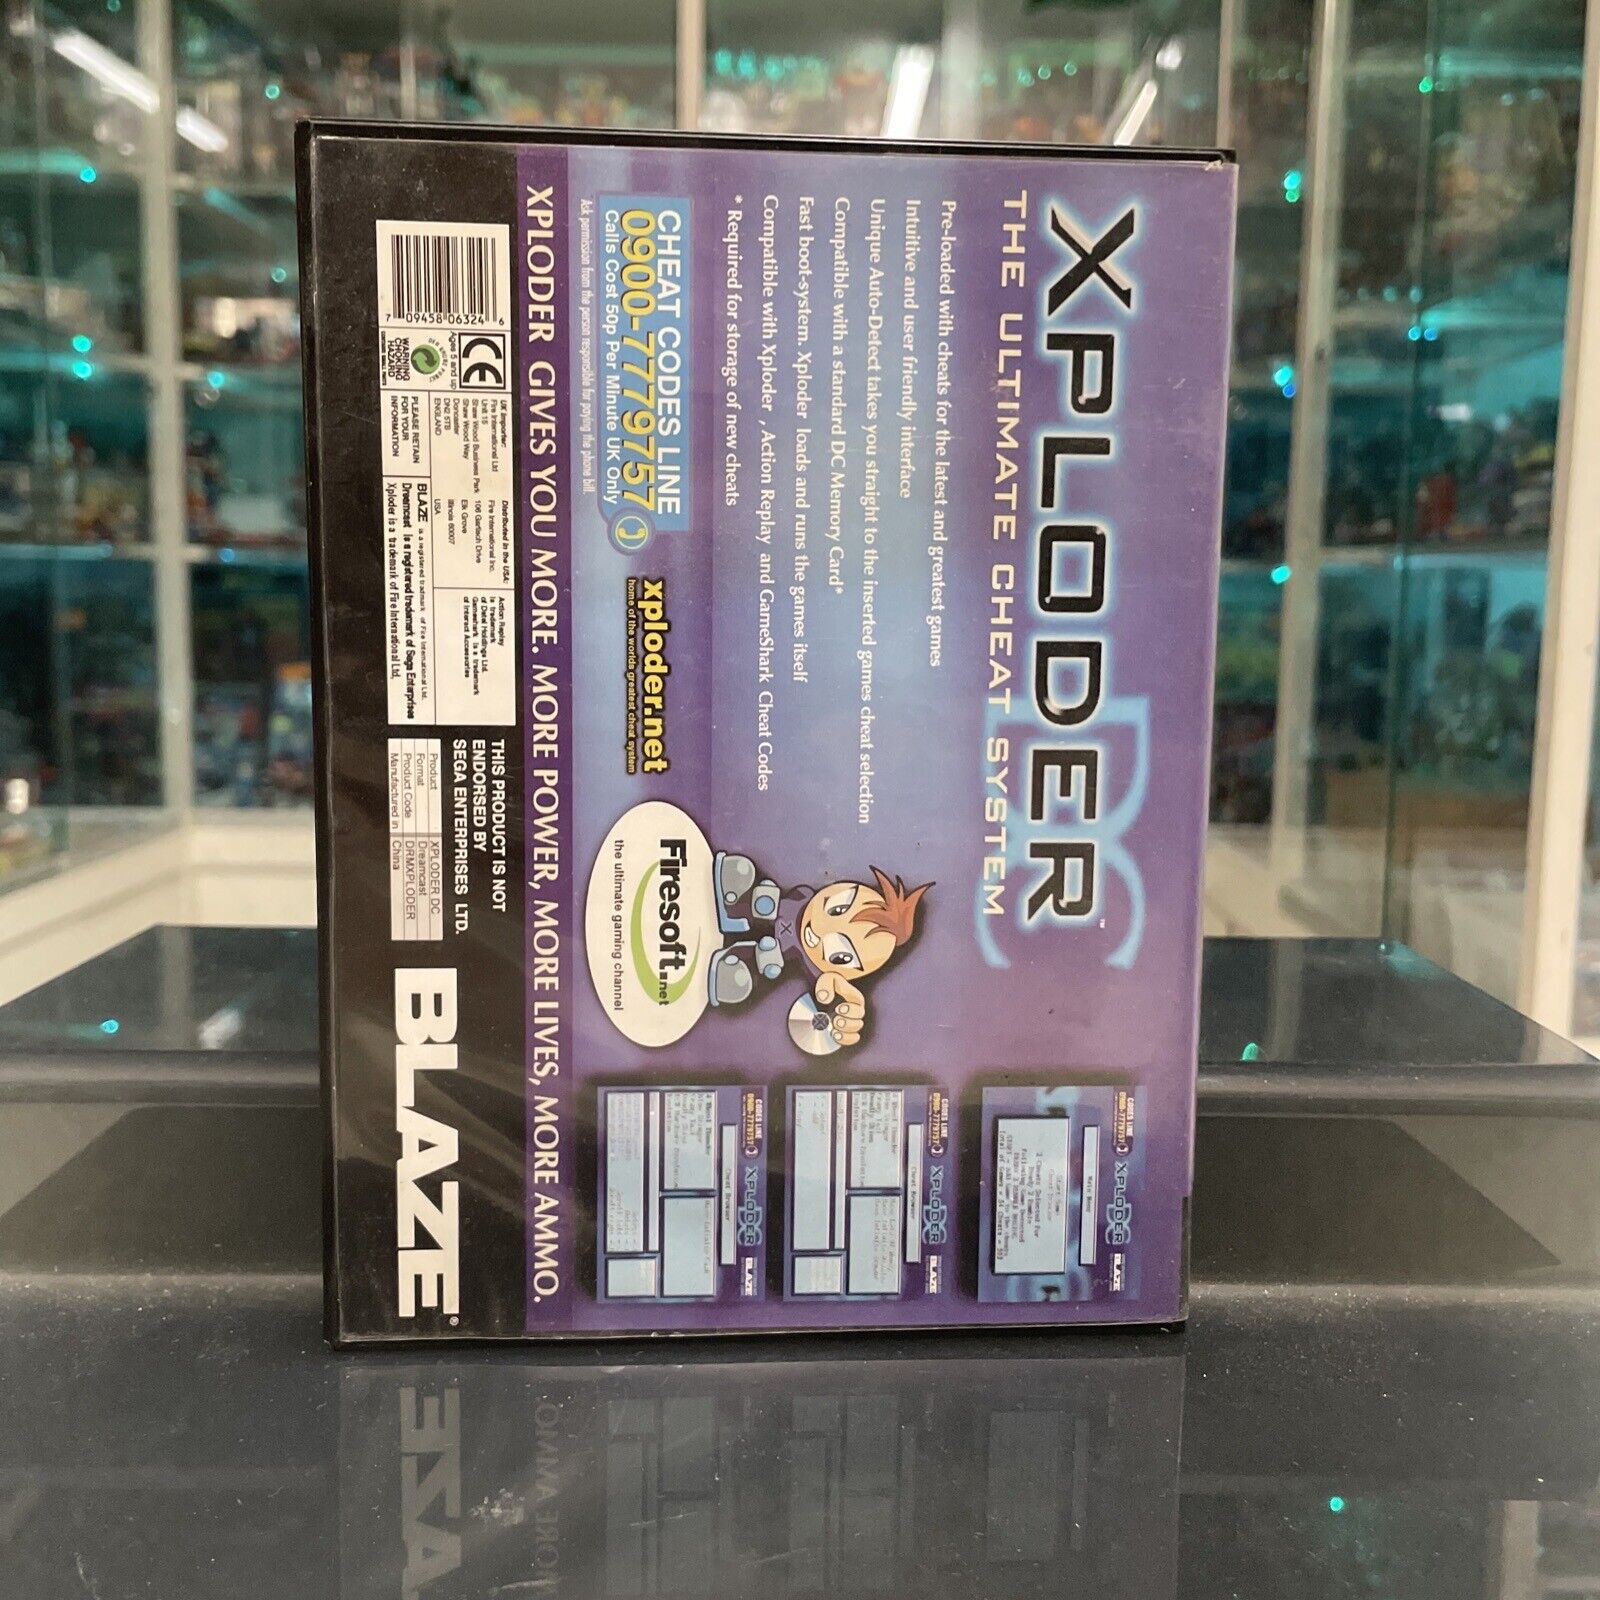 Sega-Dreamcast-Blaze-XPloder-The-Ultimate-Cheat-System-145315034270-2